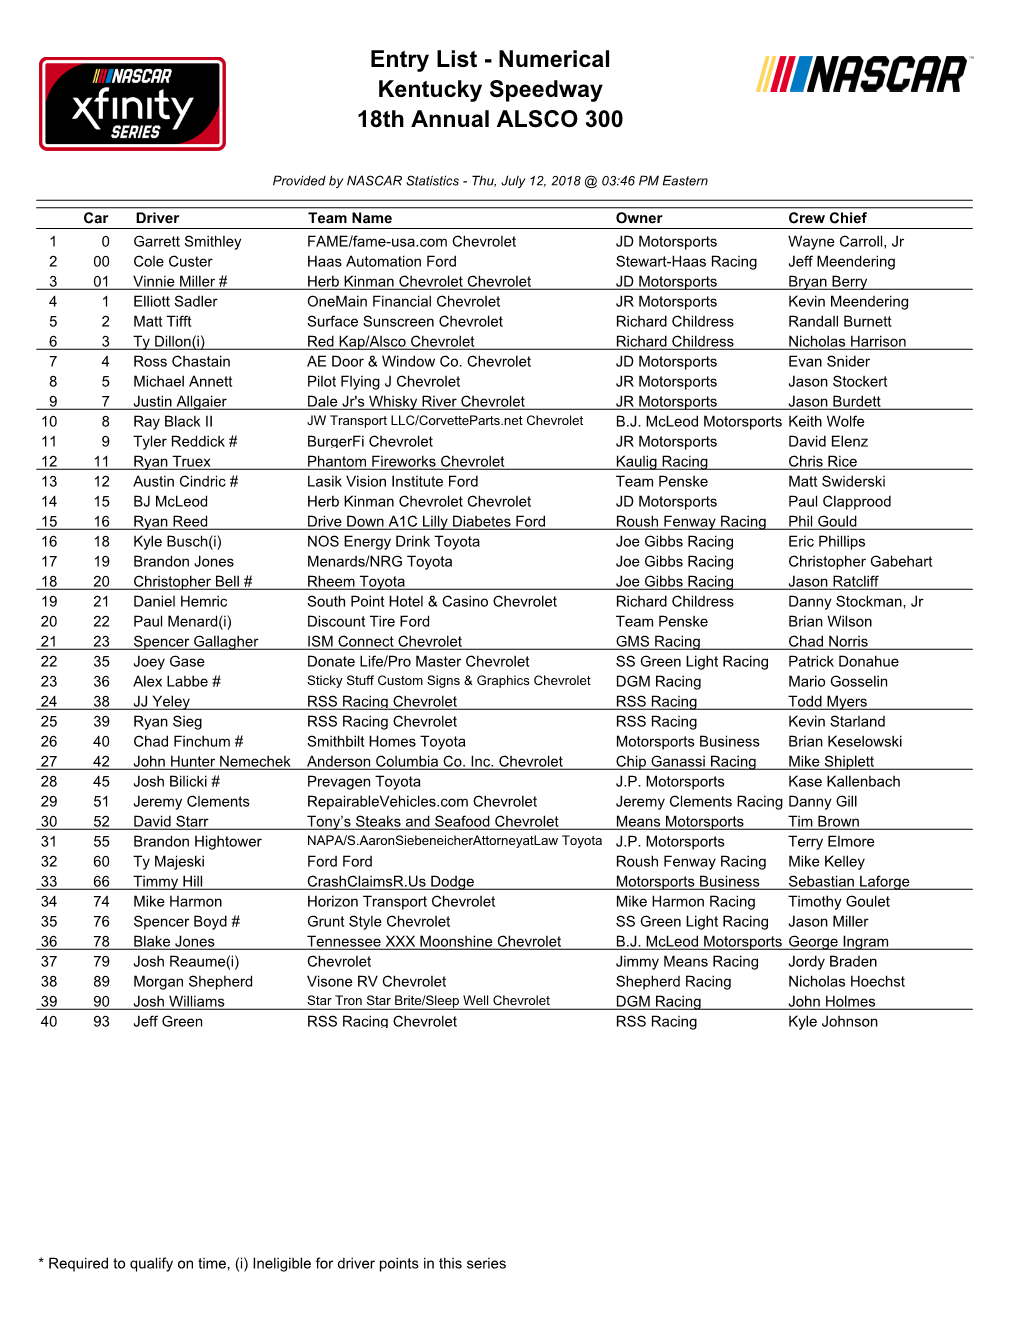 Entry List - Numerical Kentucky Speedway 18Th Annual ALSCO 300